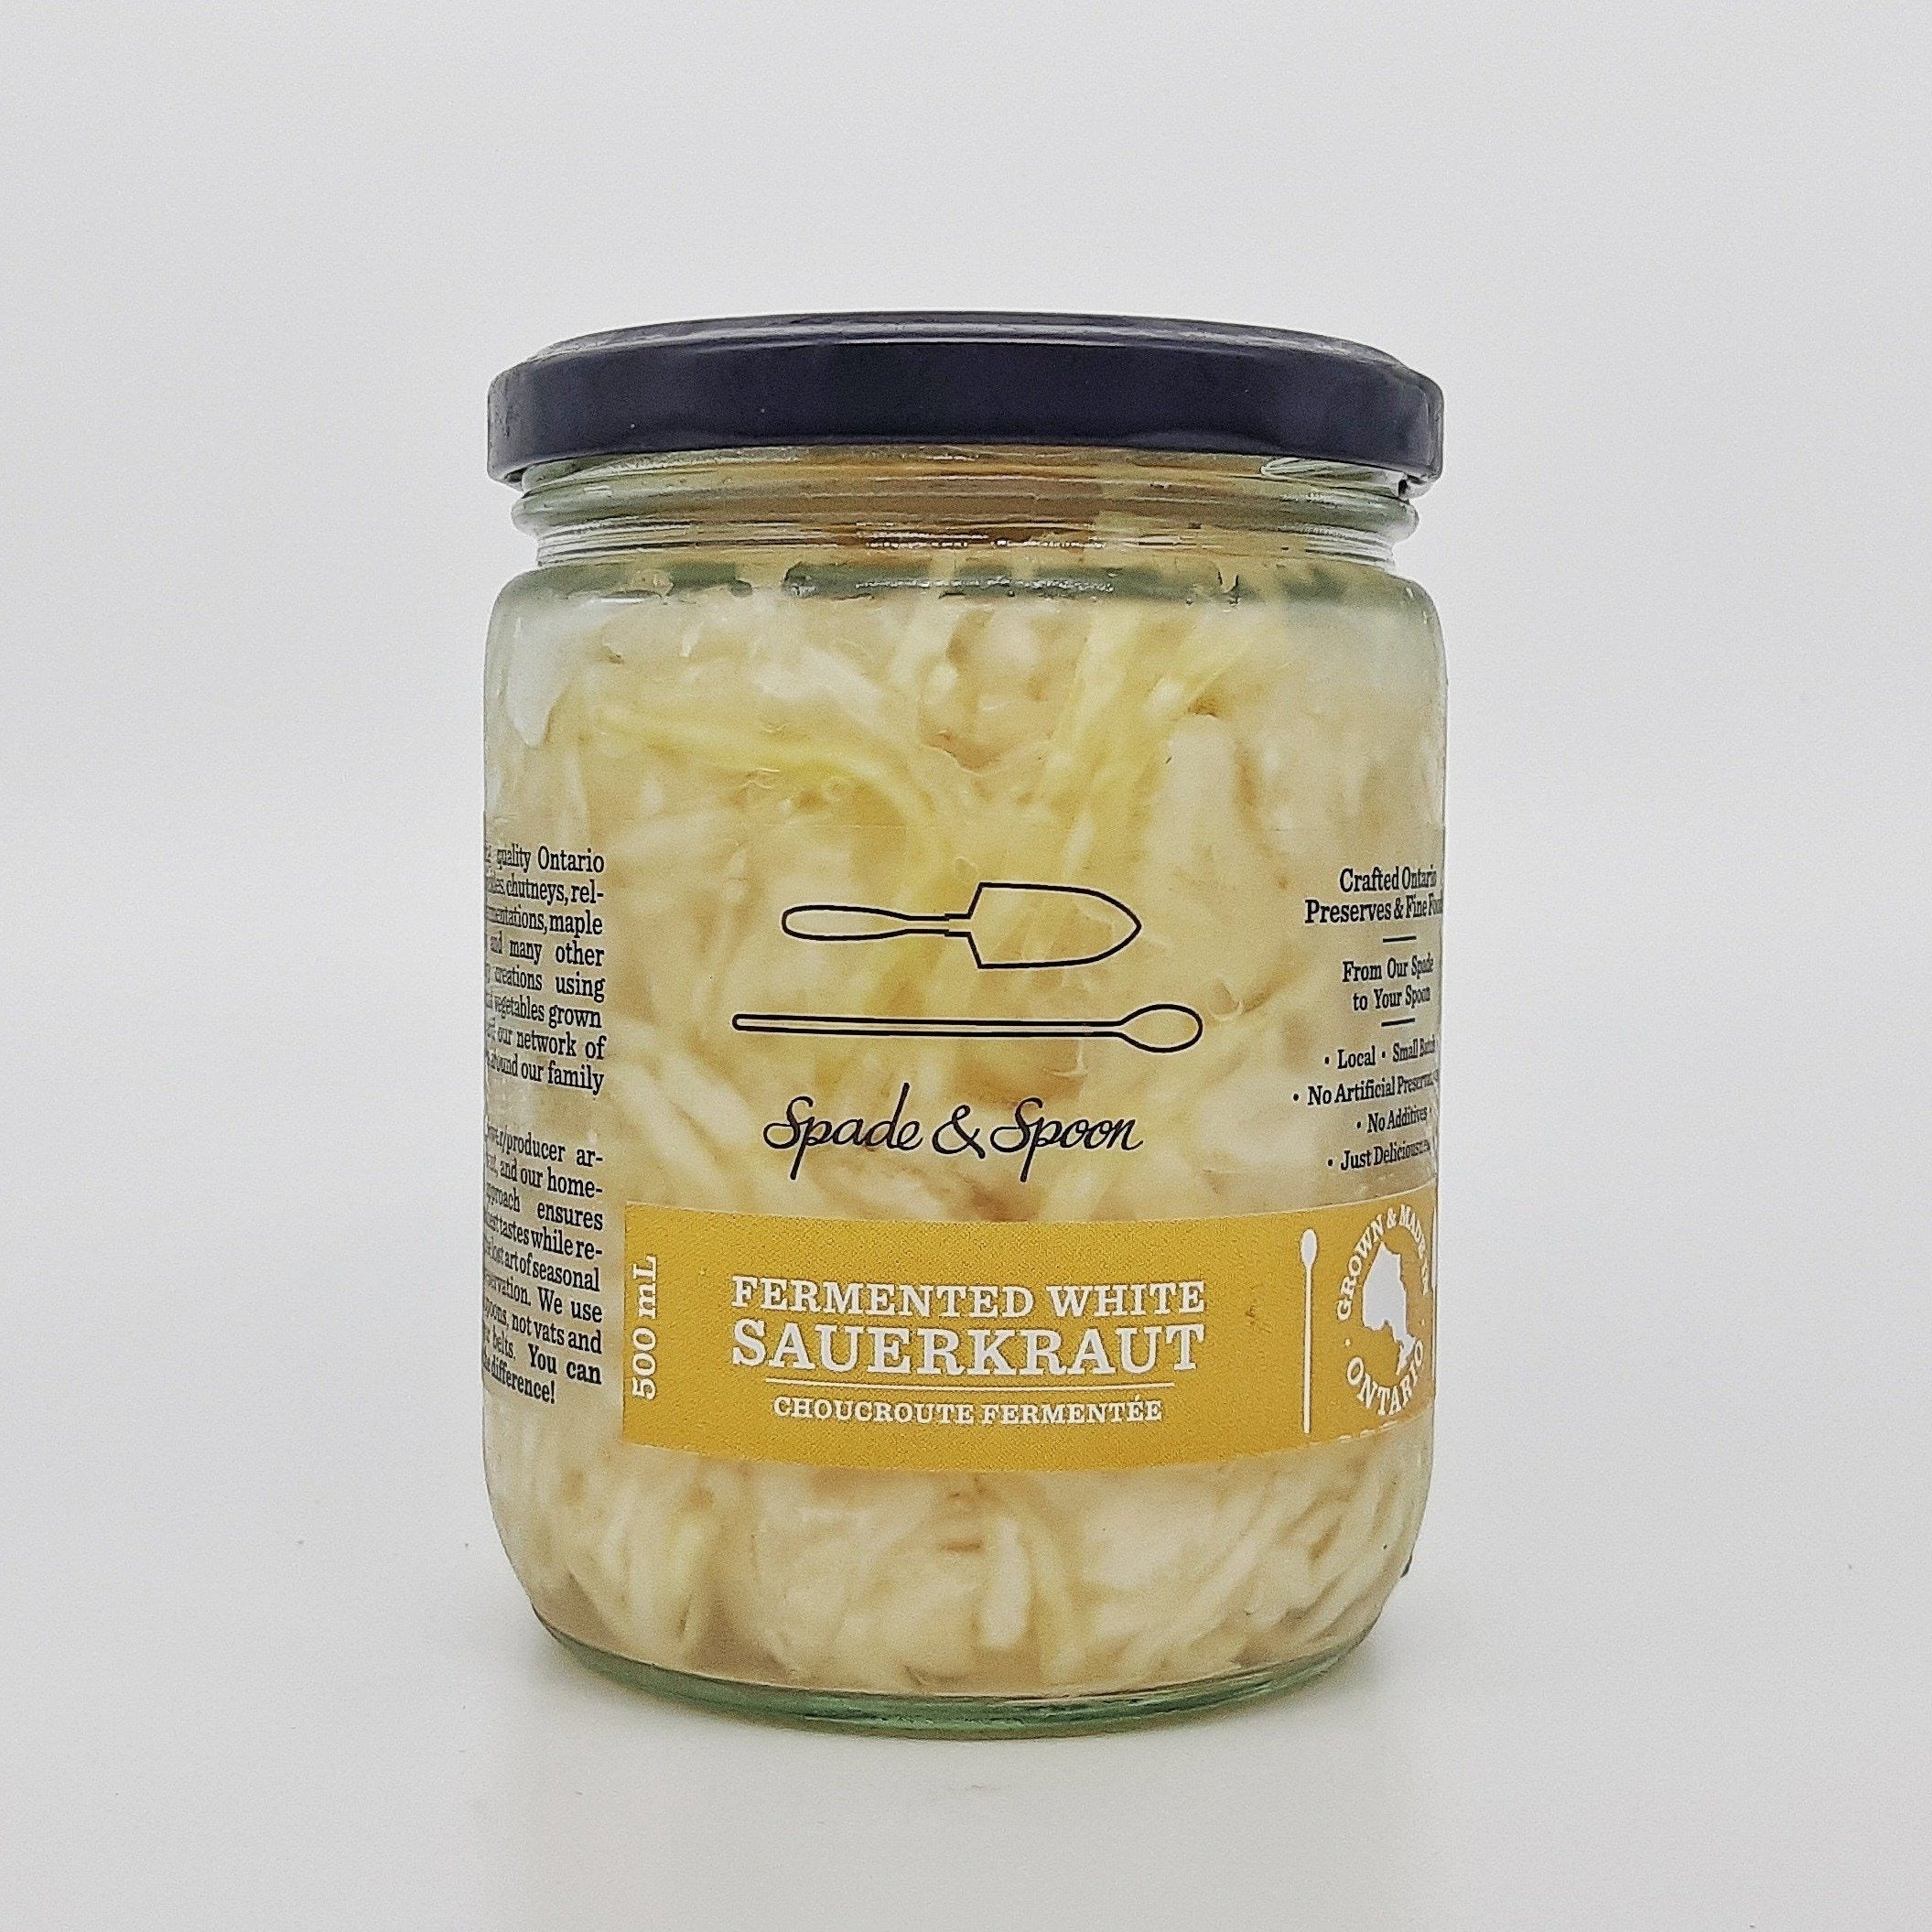 Jar of Fermented White Sauerkraut